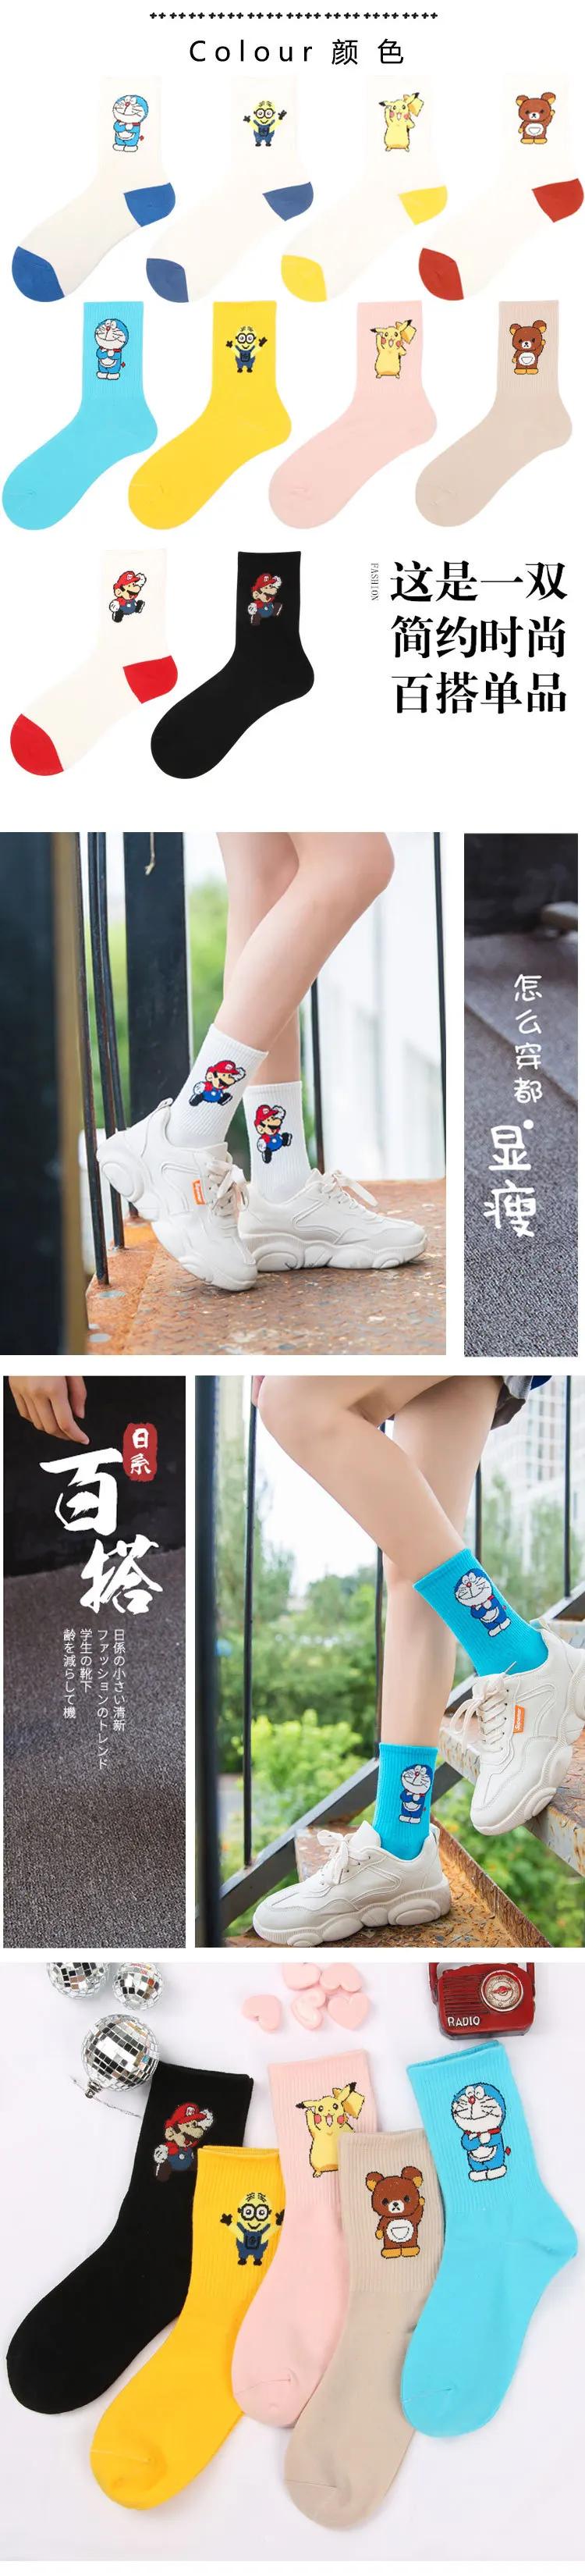 Cartoon Character Cute Socks Women Harajuku Cute Patterend Ankle Socks Hipster Skatebord Ankle Funny Socks Female